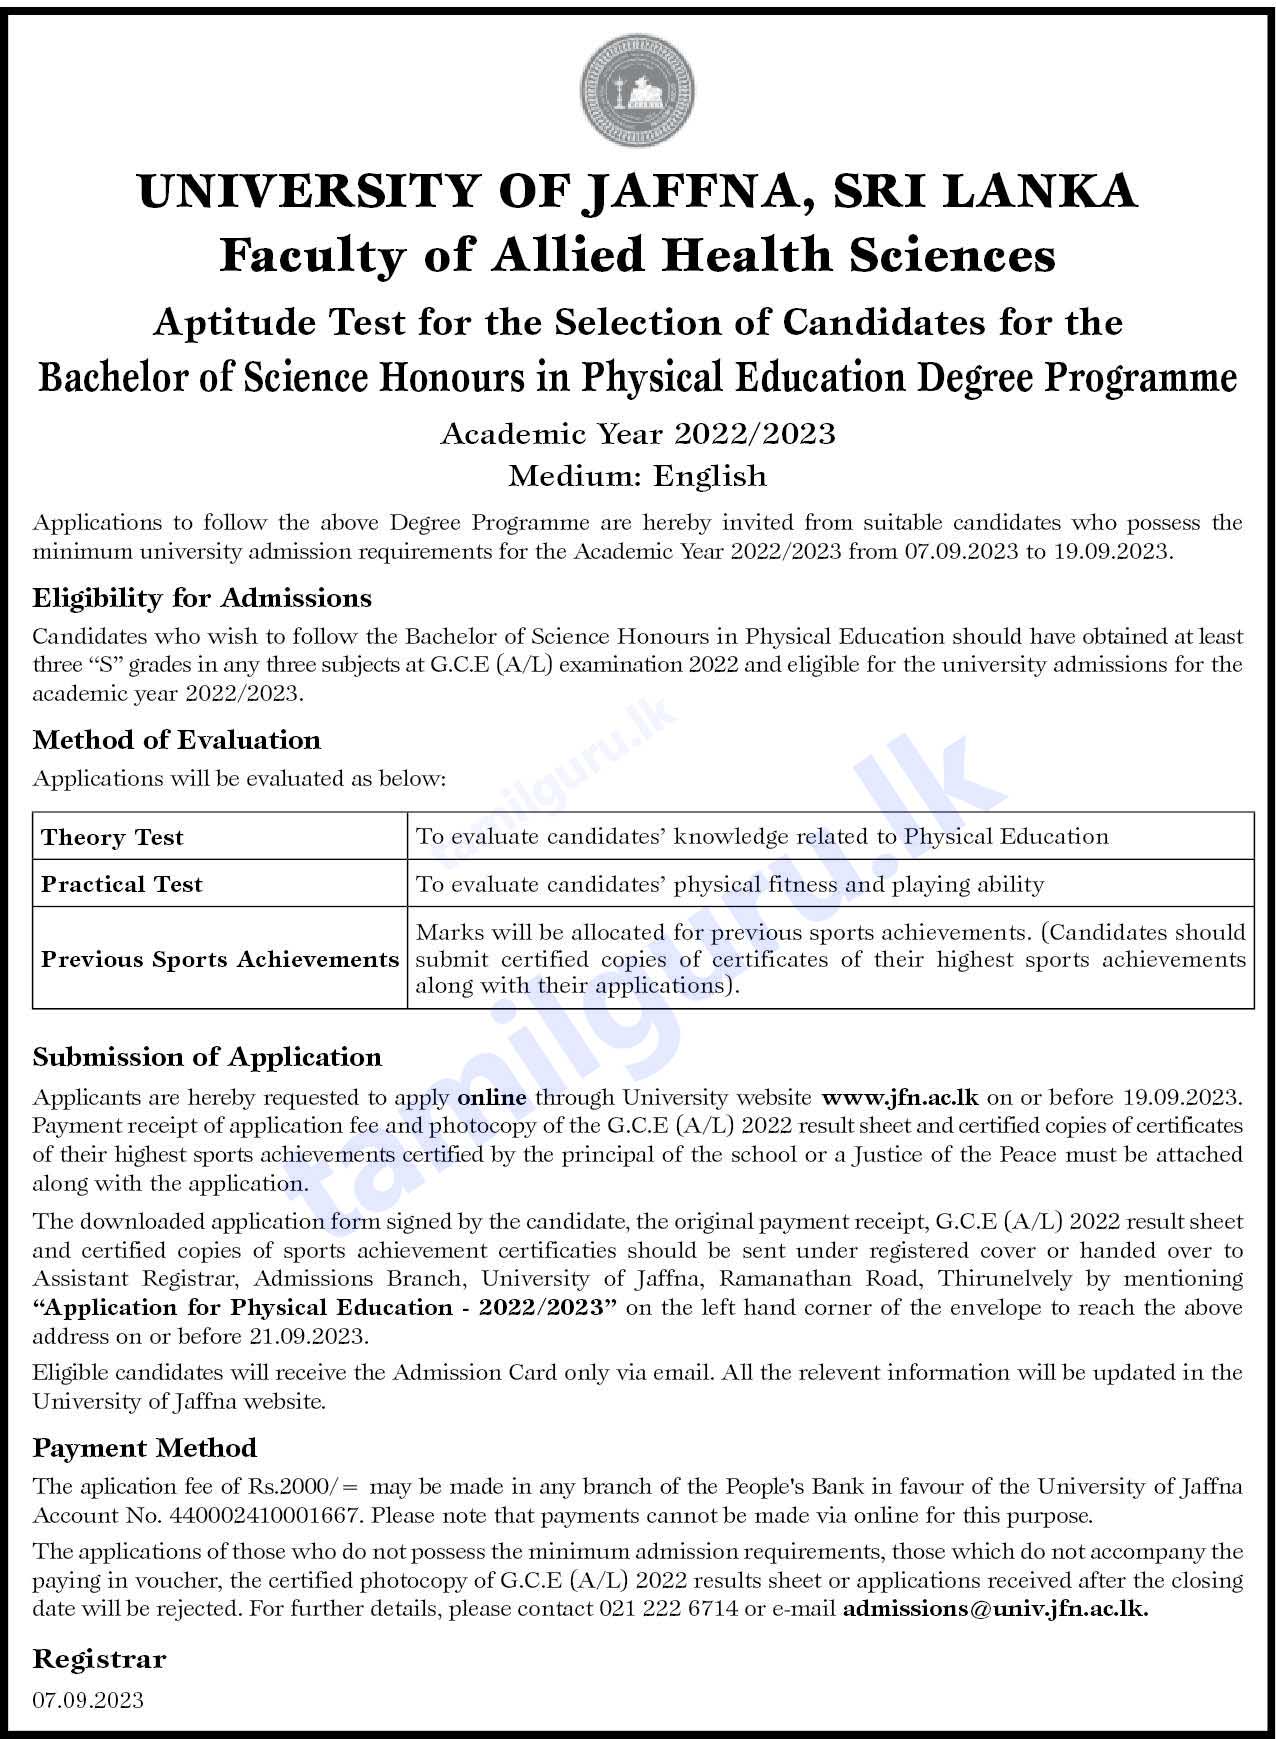 University of Jaffna Physical Education Aptitude Test Application 2023